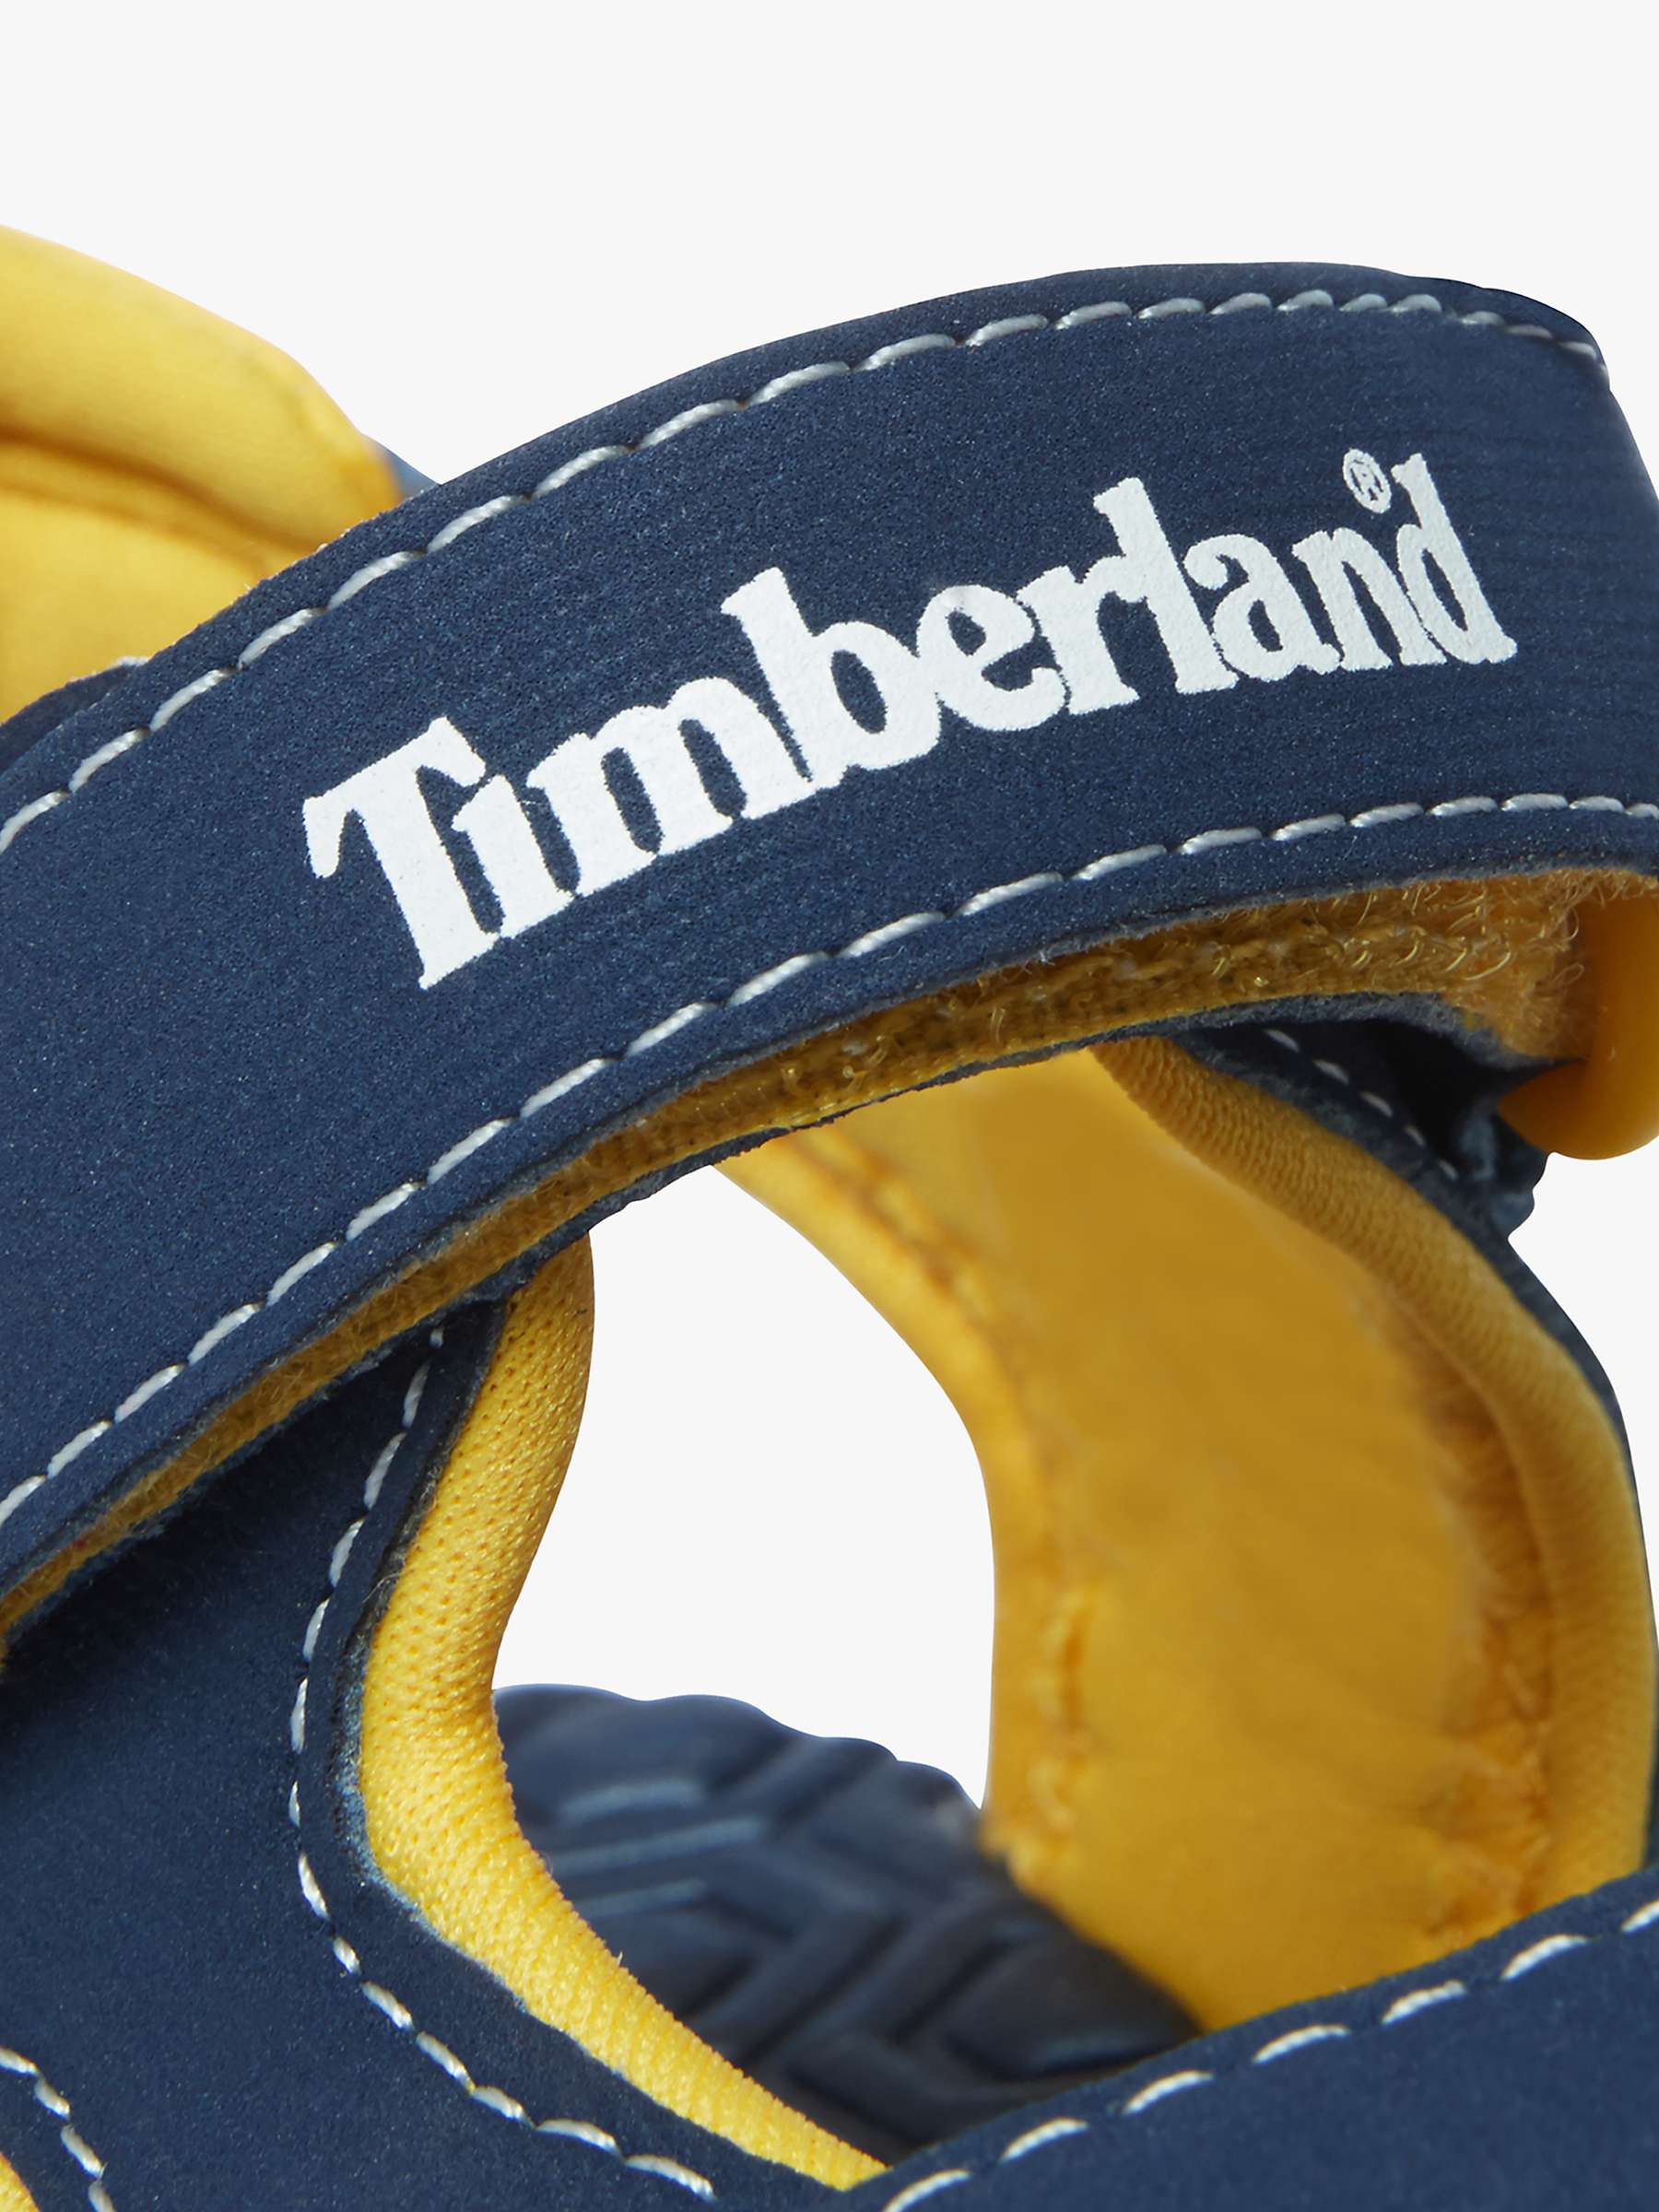 Buy Timberland Children's Adventure Seeker Riptape Sandals, Navy/Yellow Online at johnlewis.com